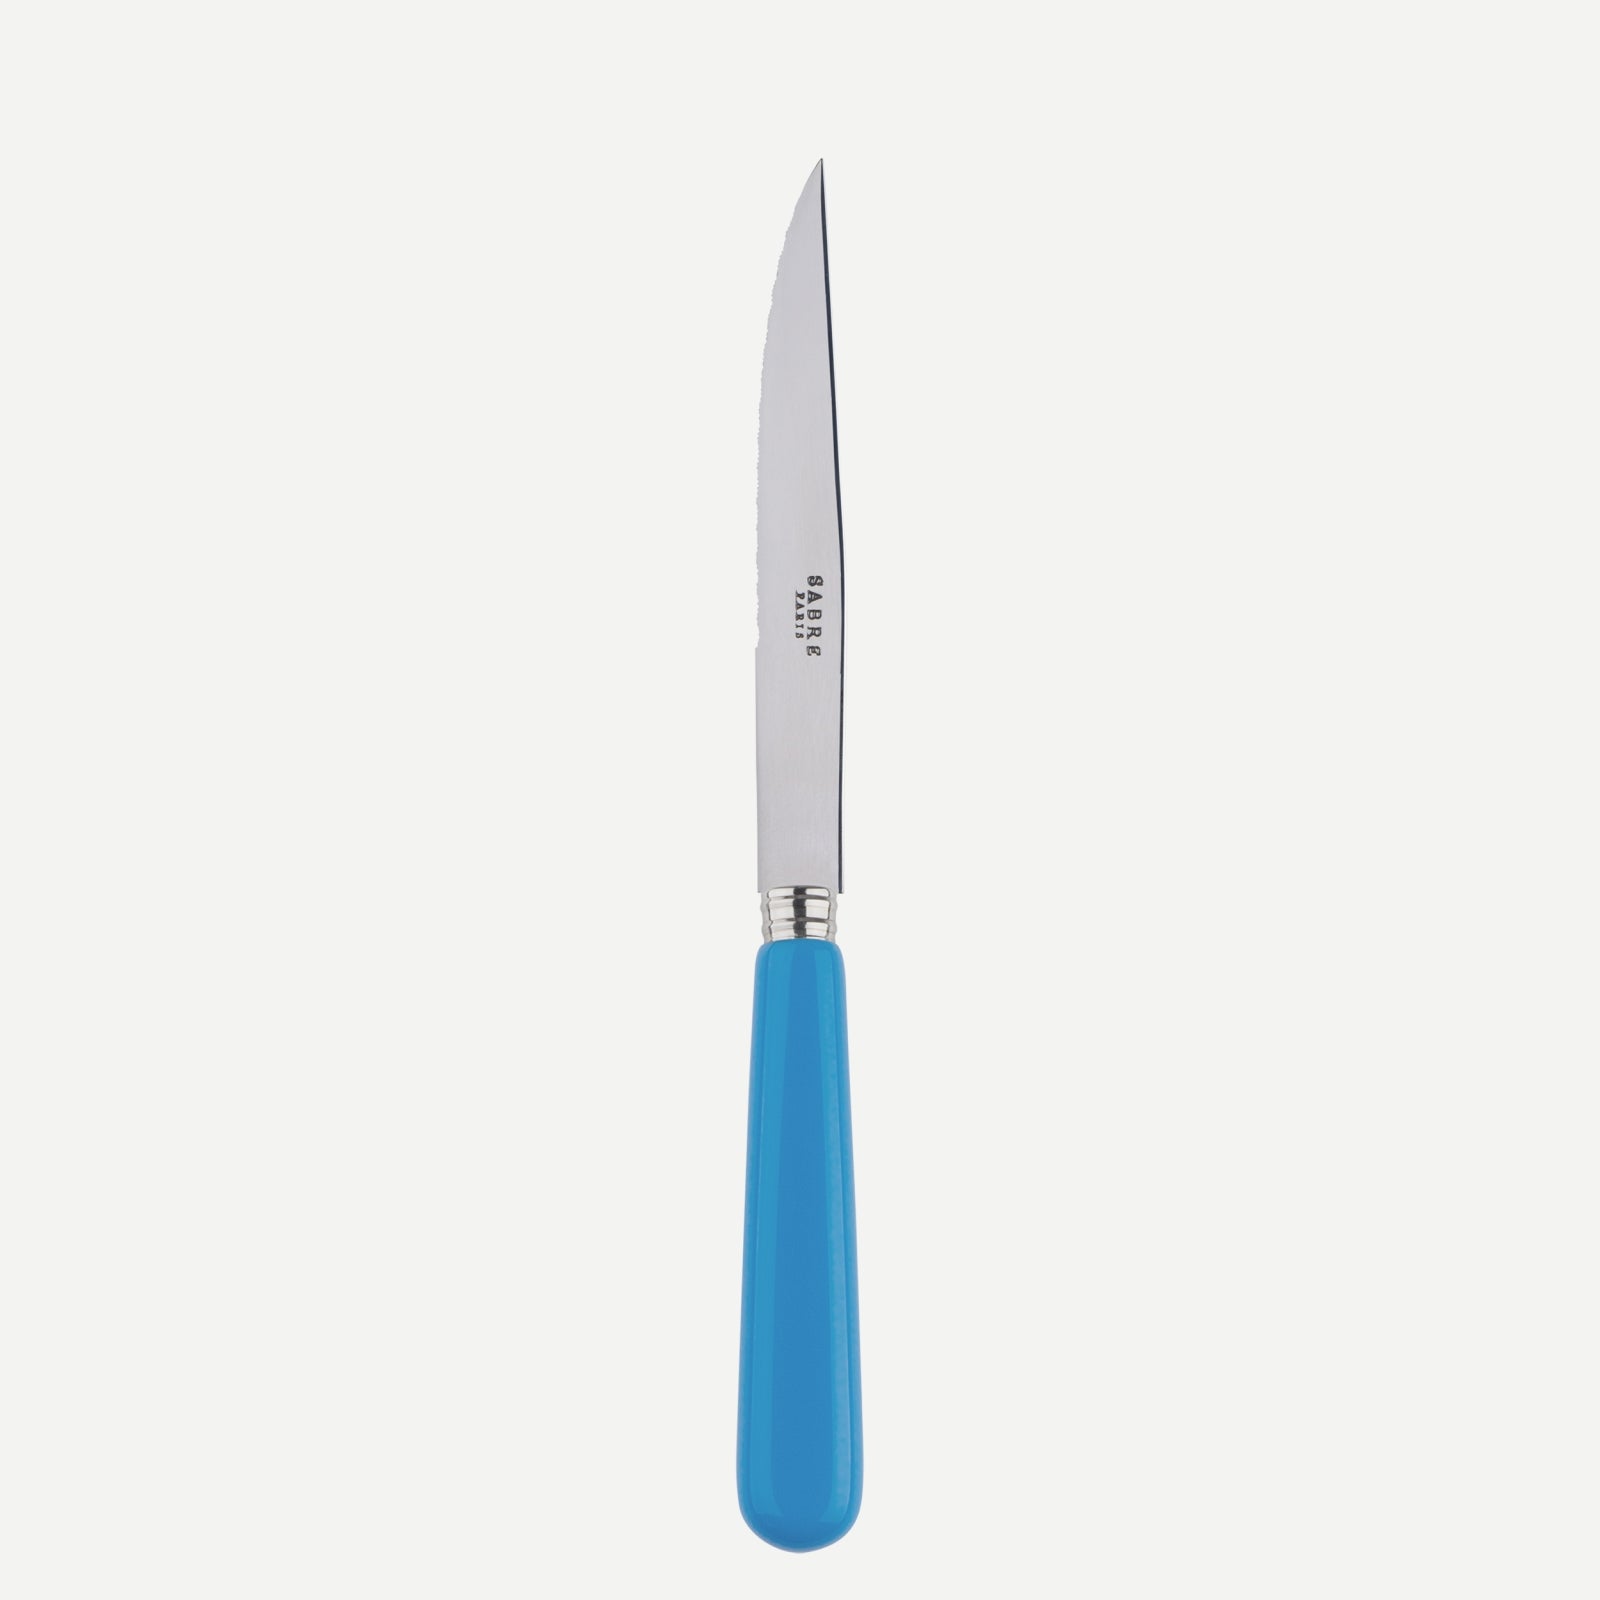 Steack knife - Pop unis - Cerulean blue